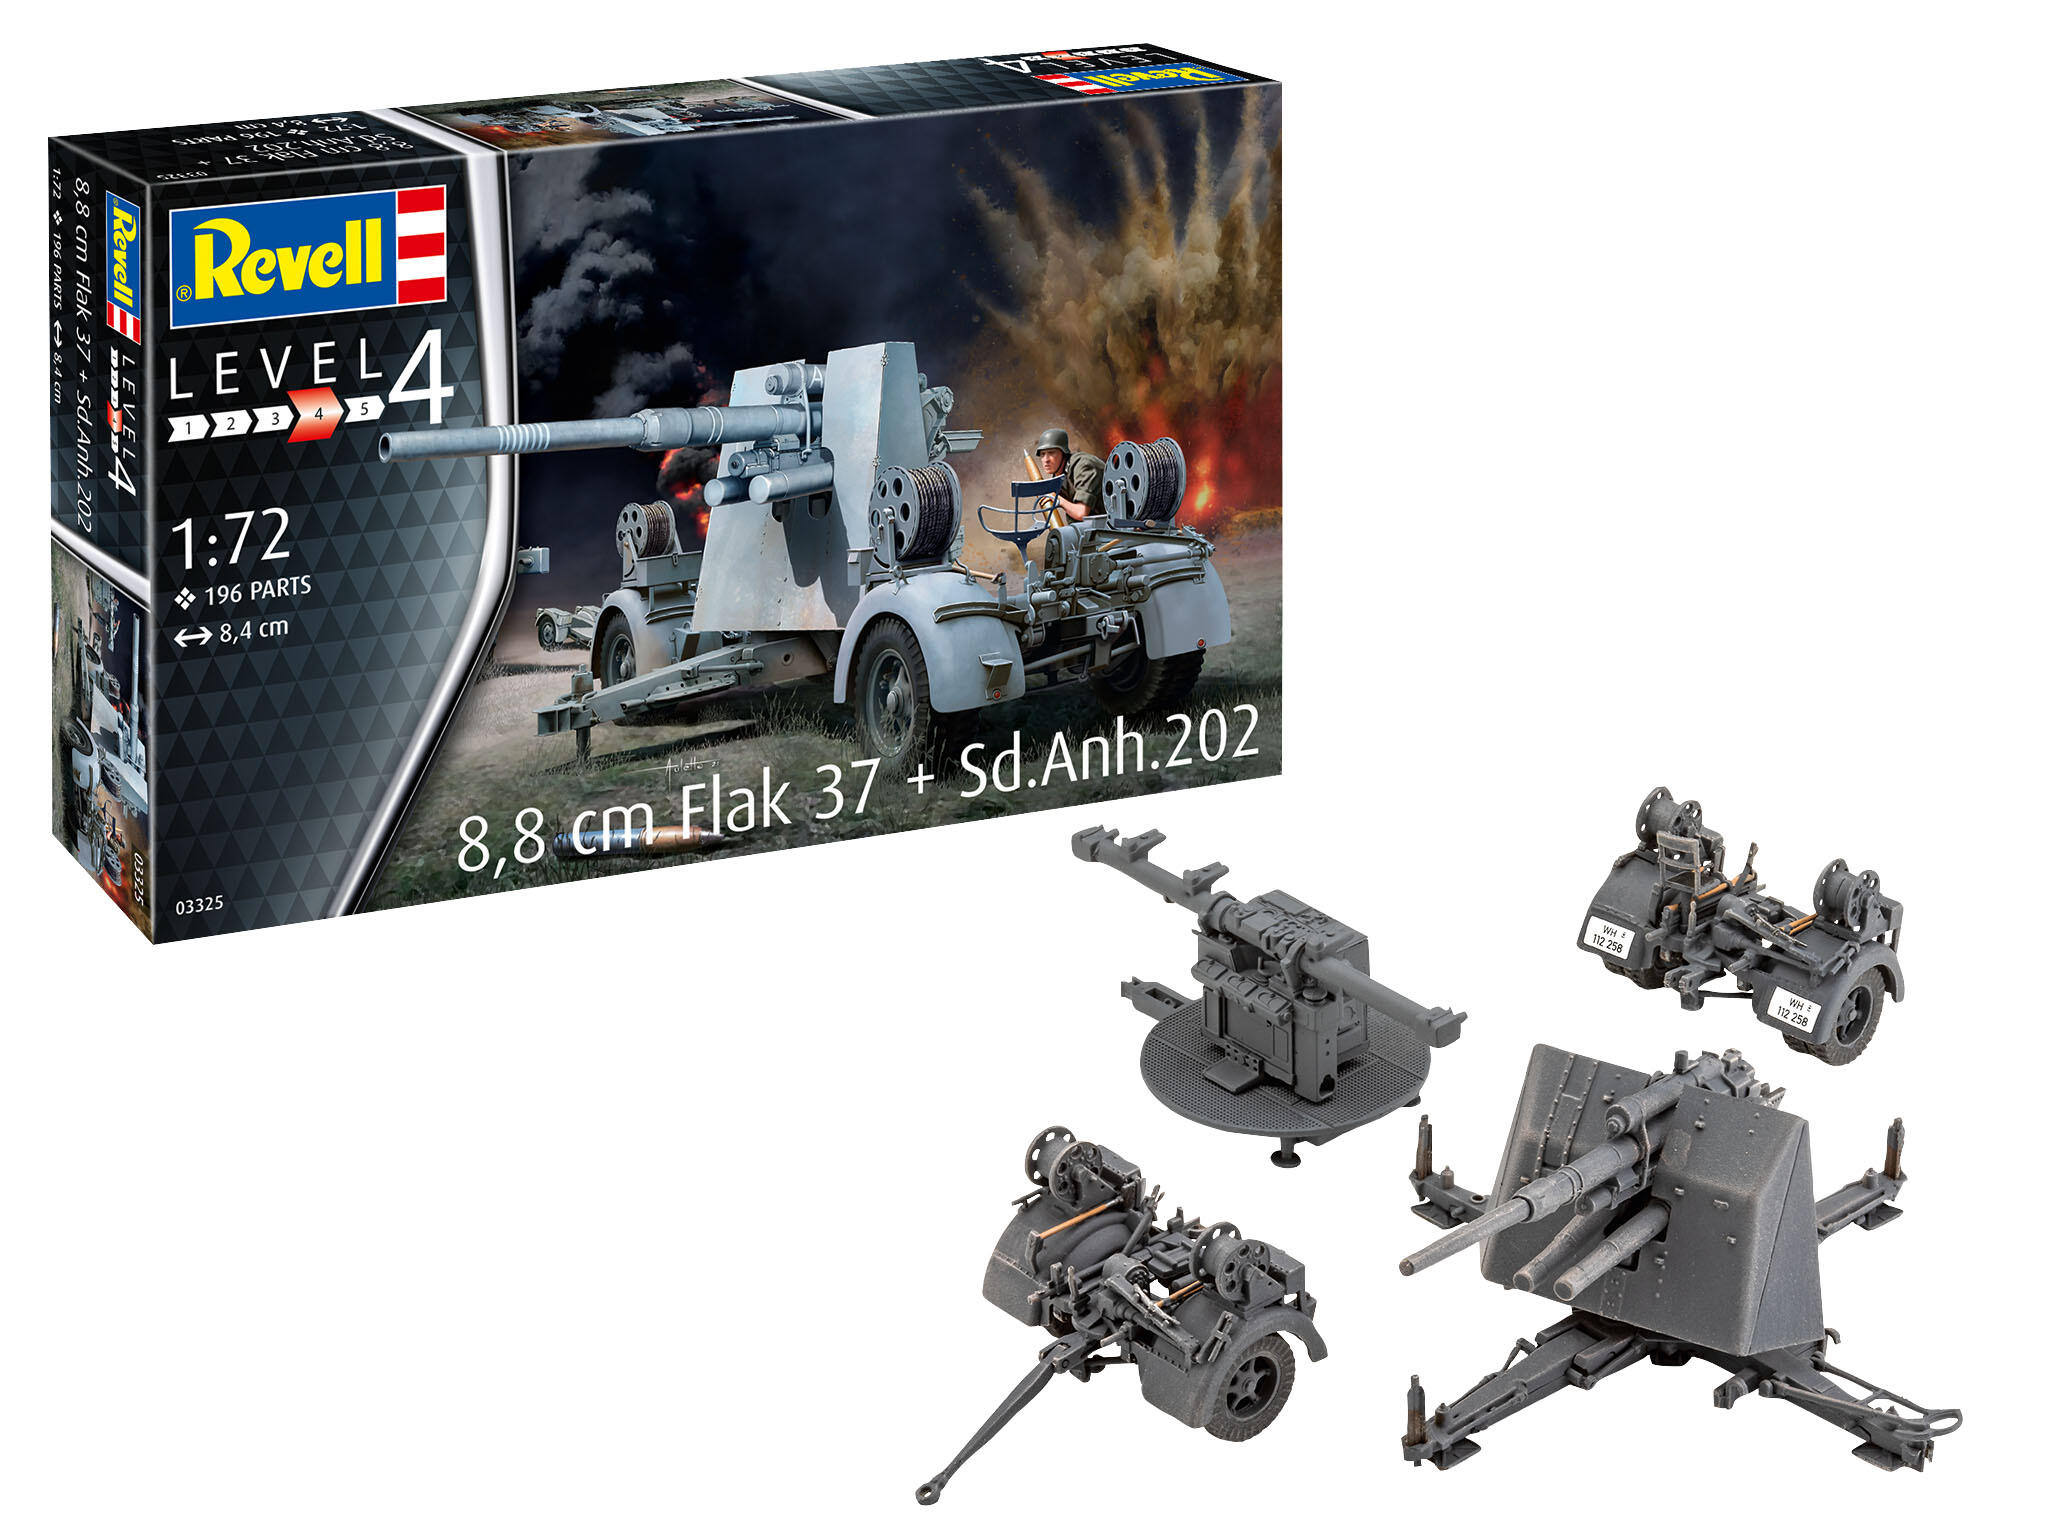 Revell 03325  8,8 cm Flak 37 + Sd.Anh.202, 1:72 Bausatz